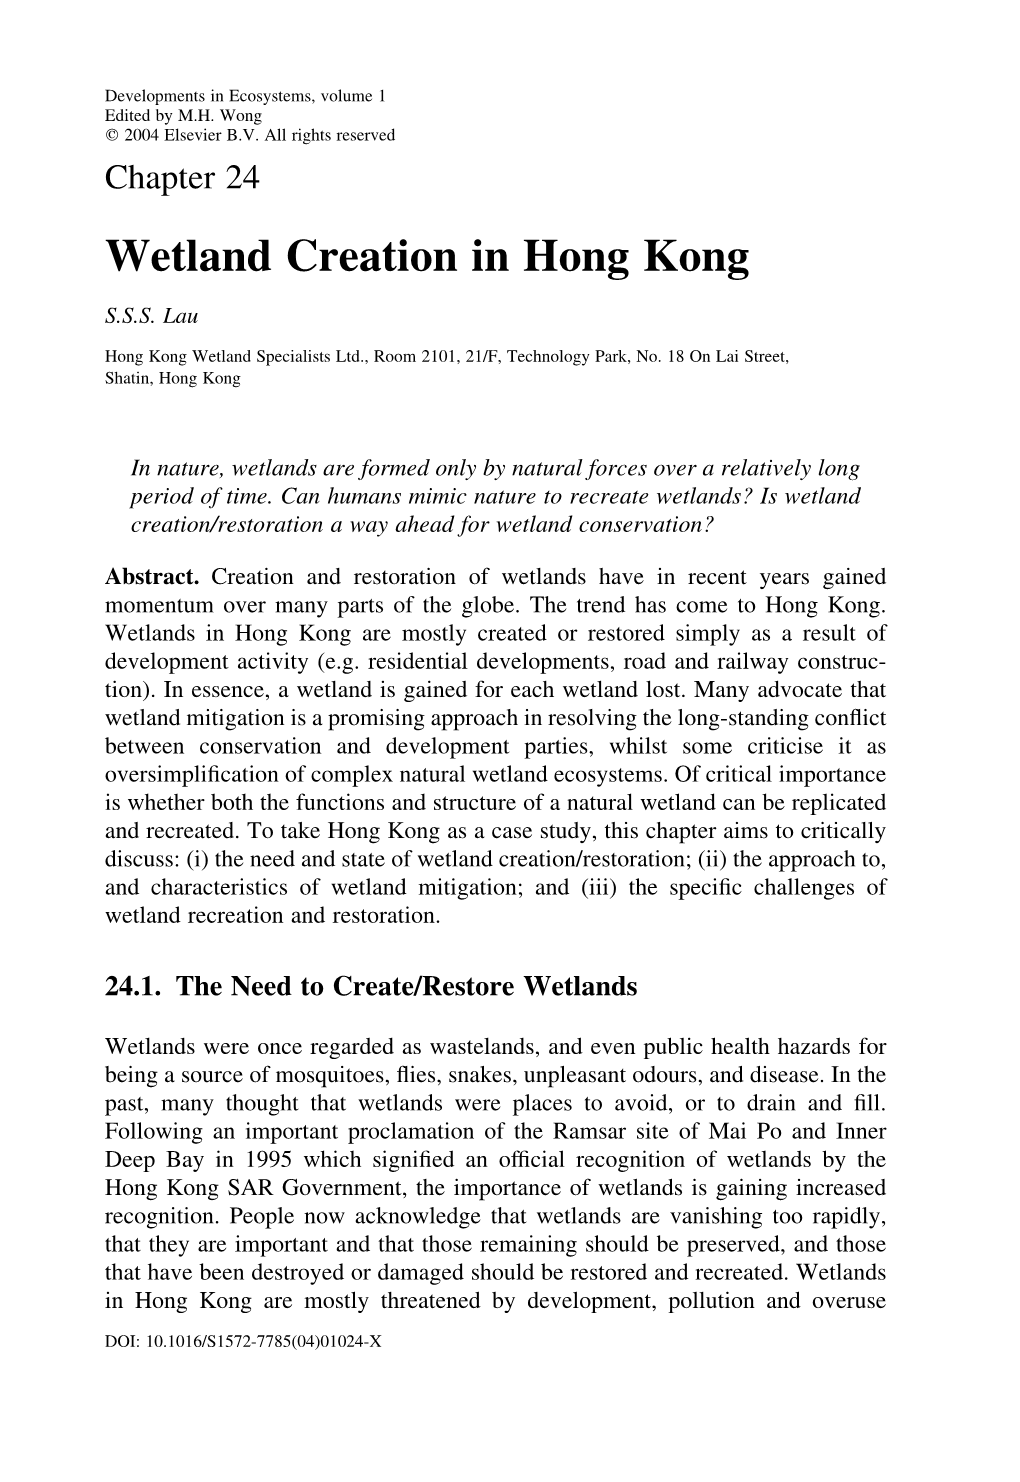 Chapter 24 Wetland Creation in Hong Kong